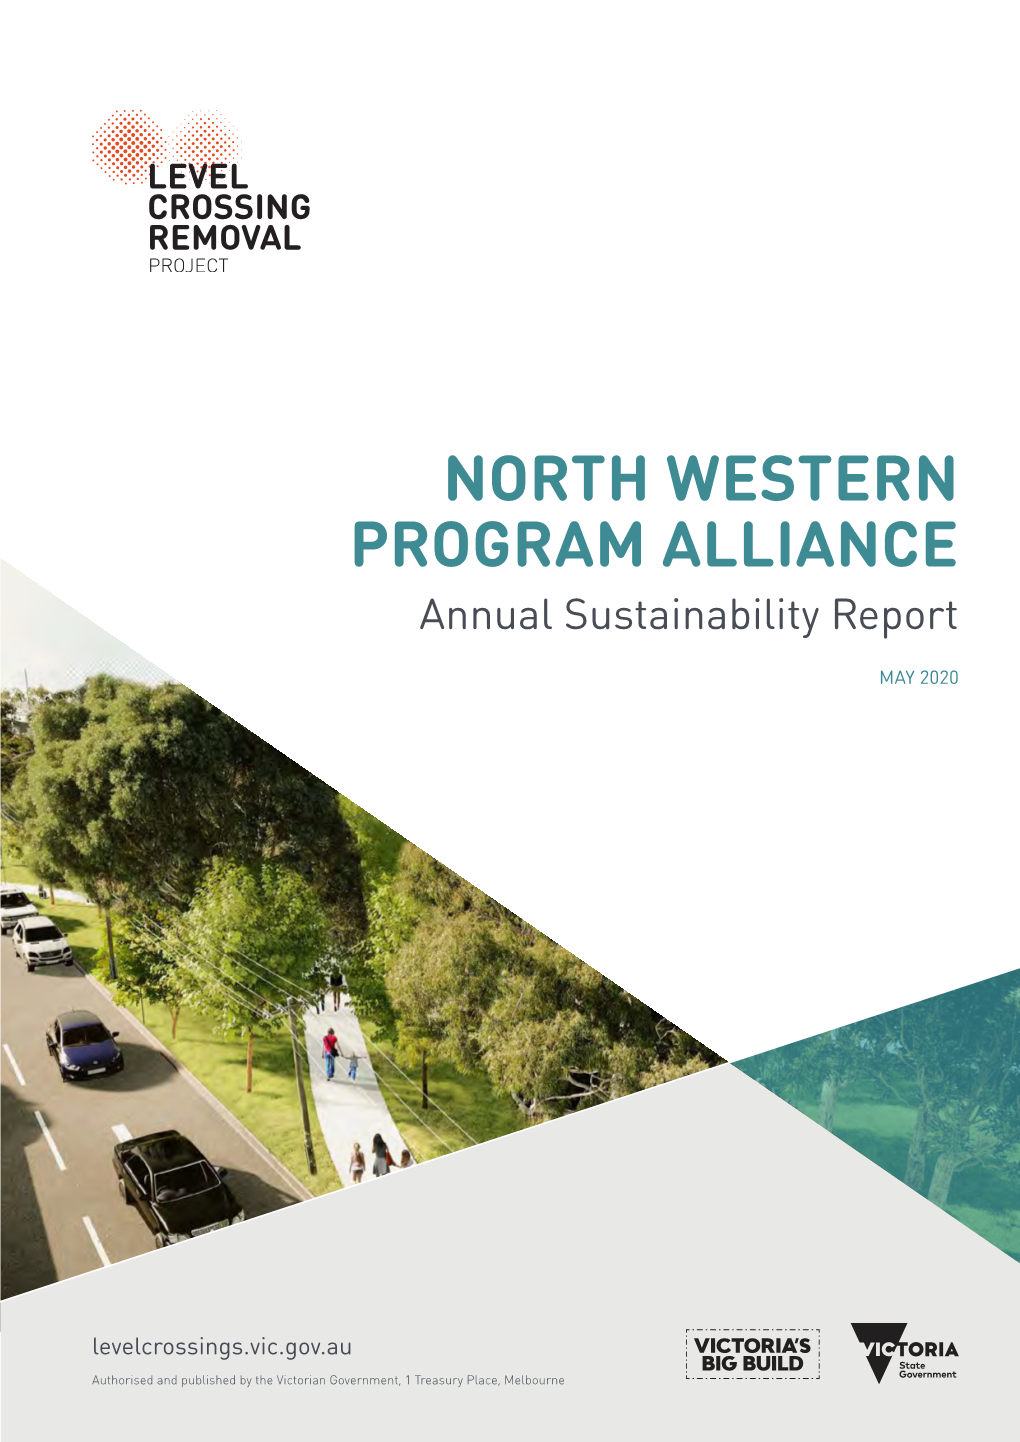 North Western Program Alliance Annual Sustainability Report 2019